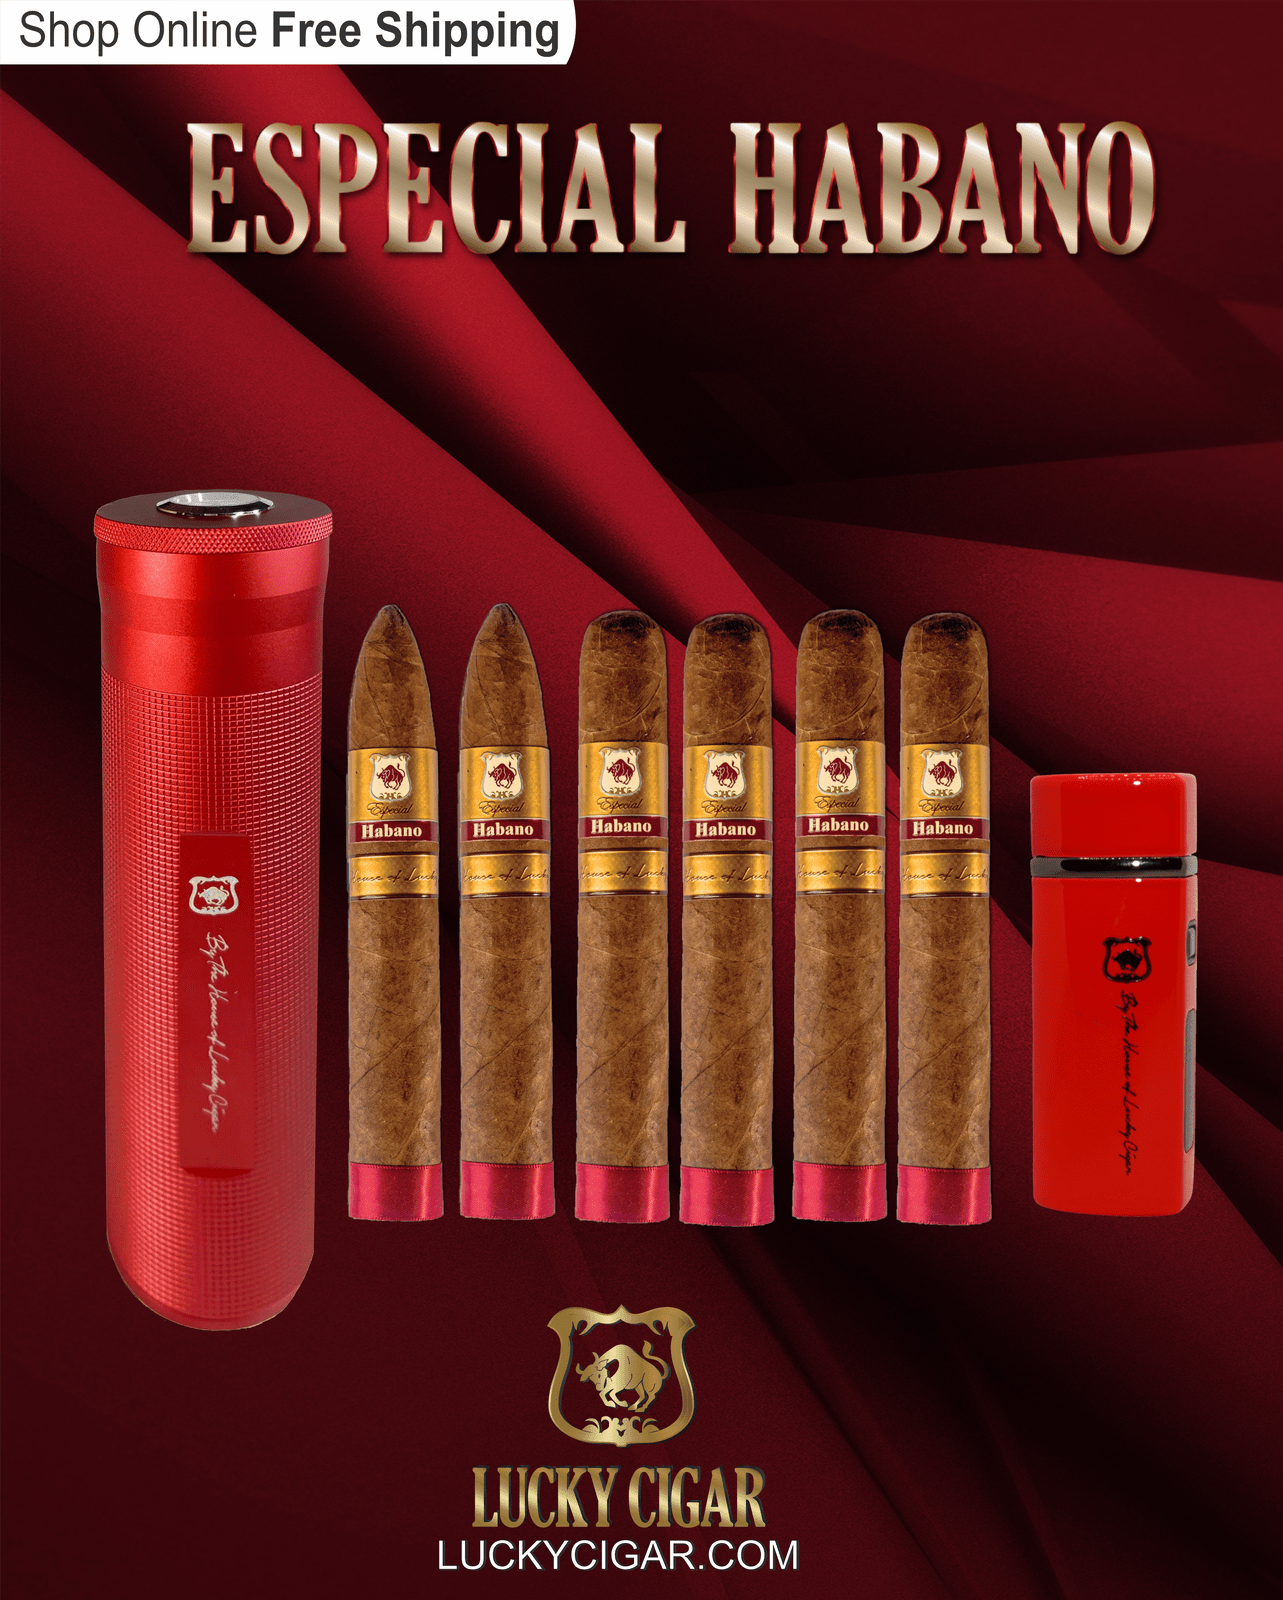 Habano Cigars: Especial Habano by Lucky Cigar: Set of 6 Cigars 4 Toro, 2 Torpedo with Humidor, Torch